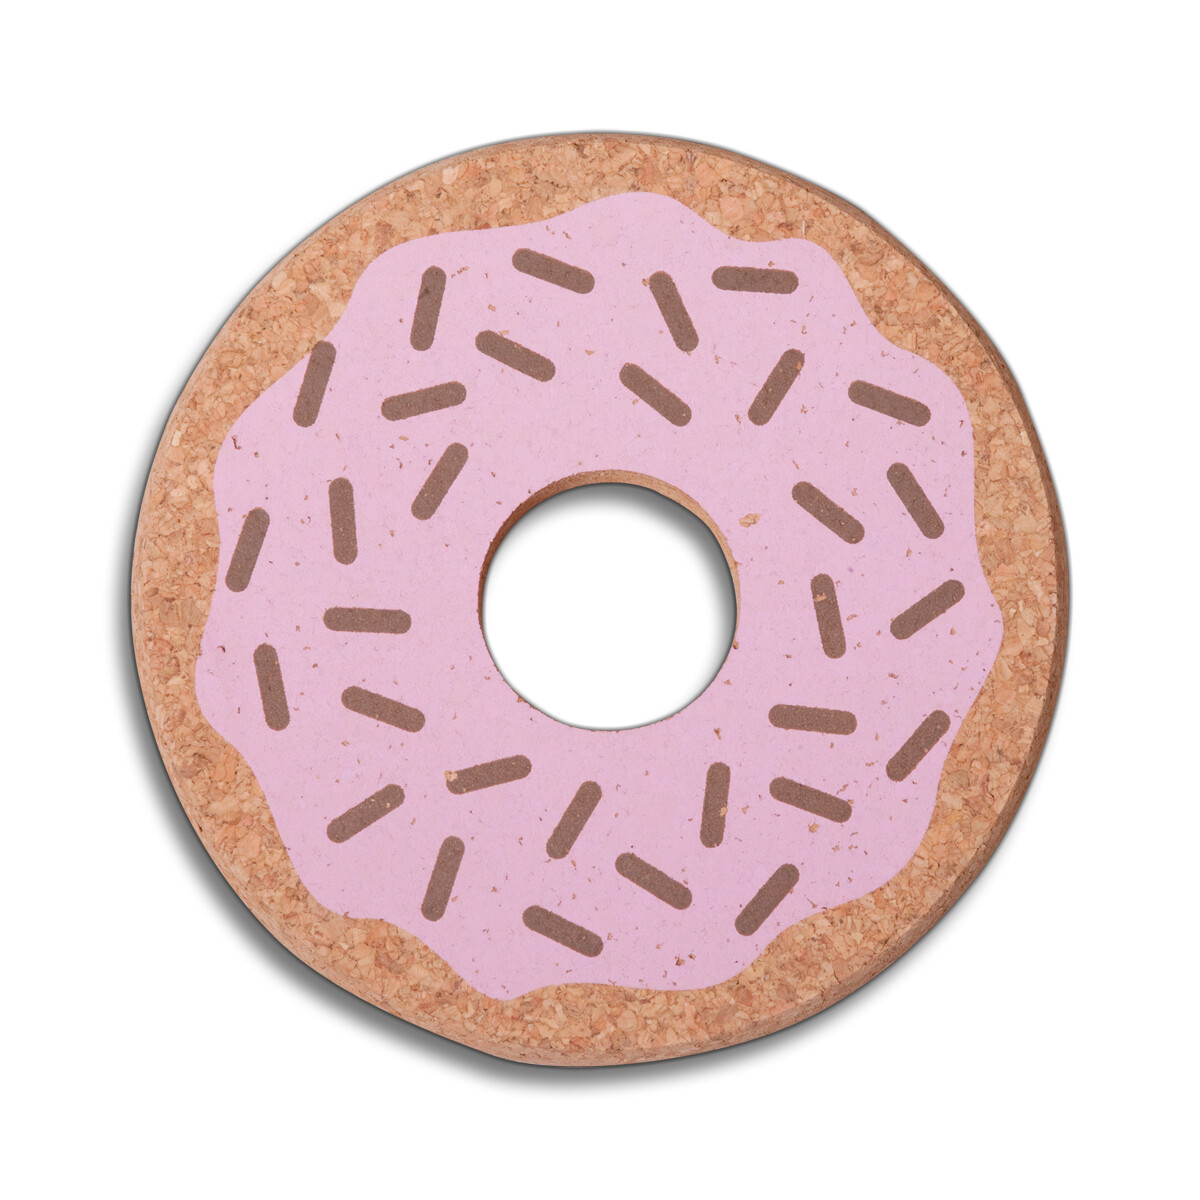 Topfuntersetzer "Donut" Kork